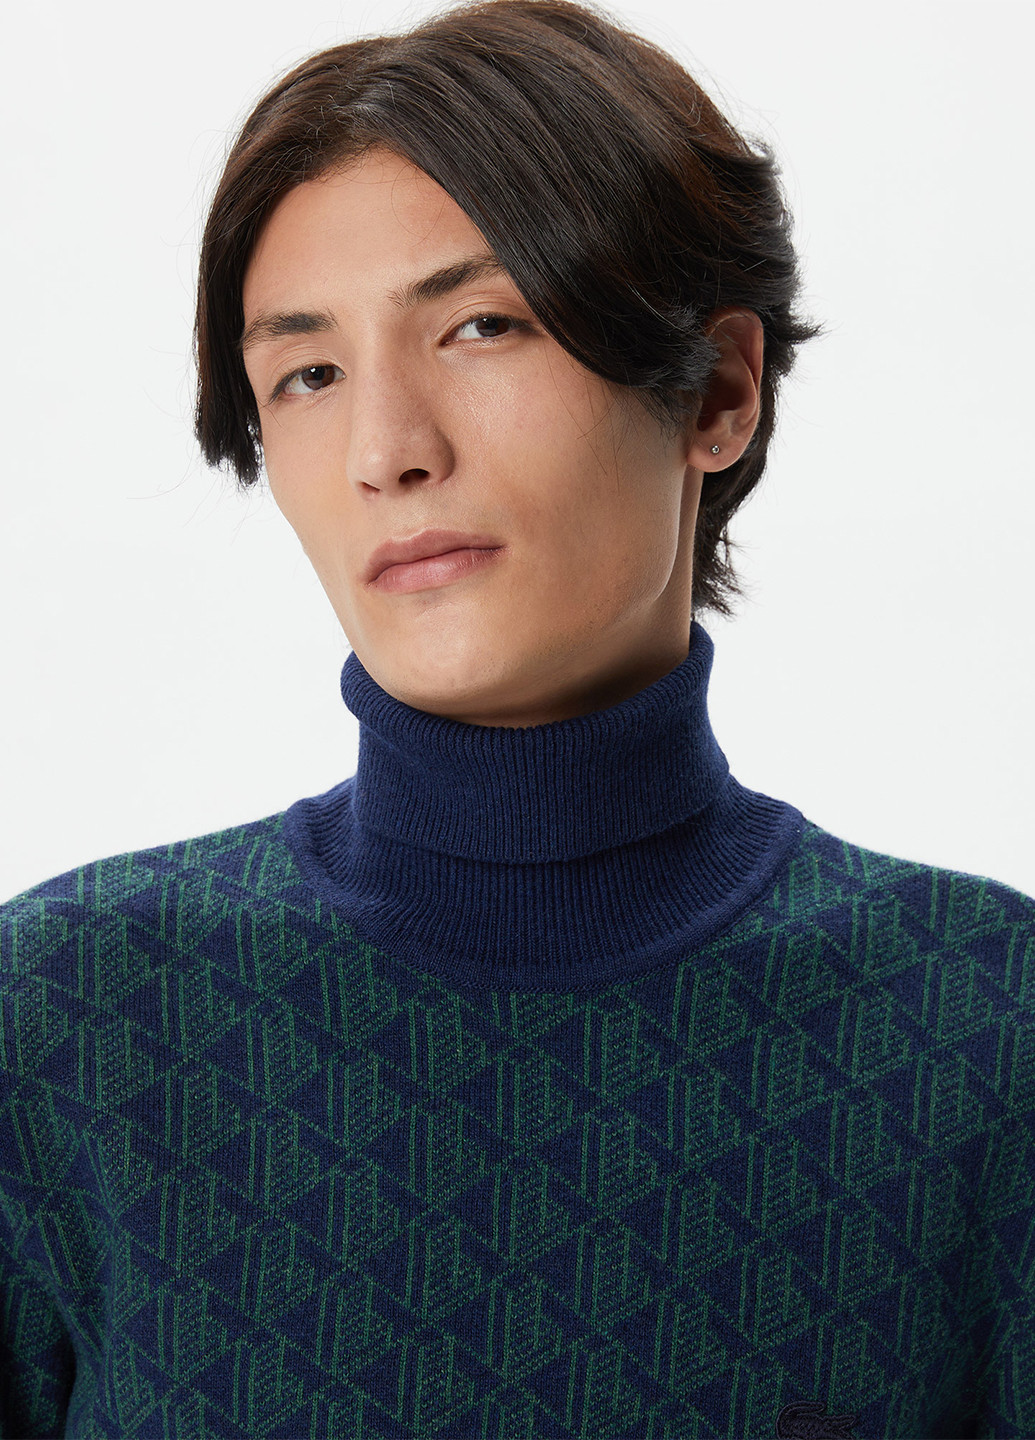 Темно-синий демисезонный свитер Lacoste